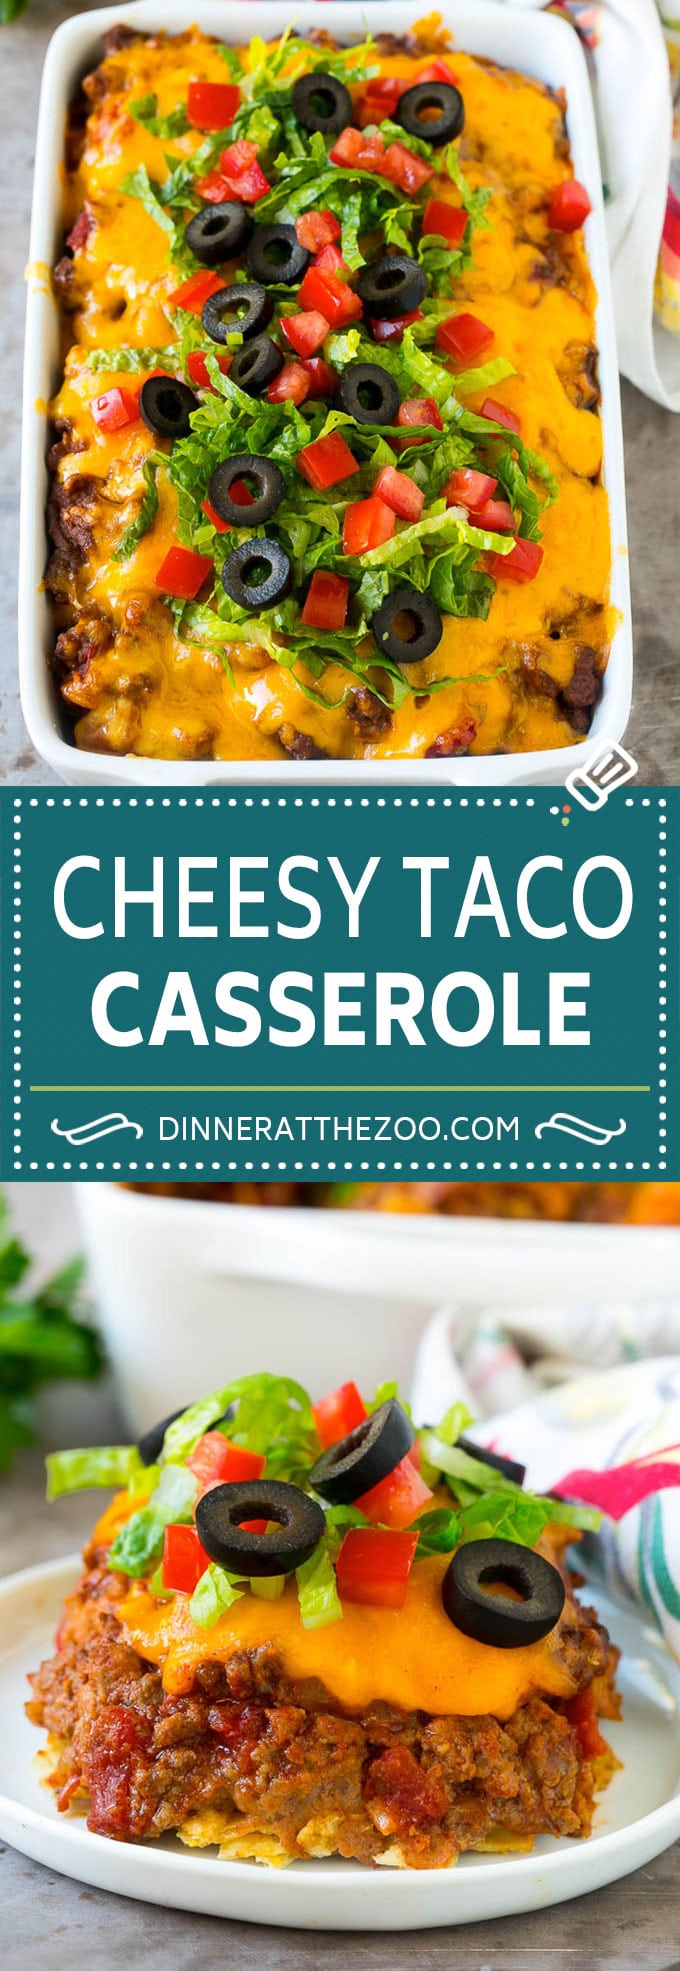 Taco Casserole Recipe | Mexican Casserole | Beef Casserole #casserole #tacos #beef #dinner #cheese #dinneratthezoo